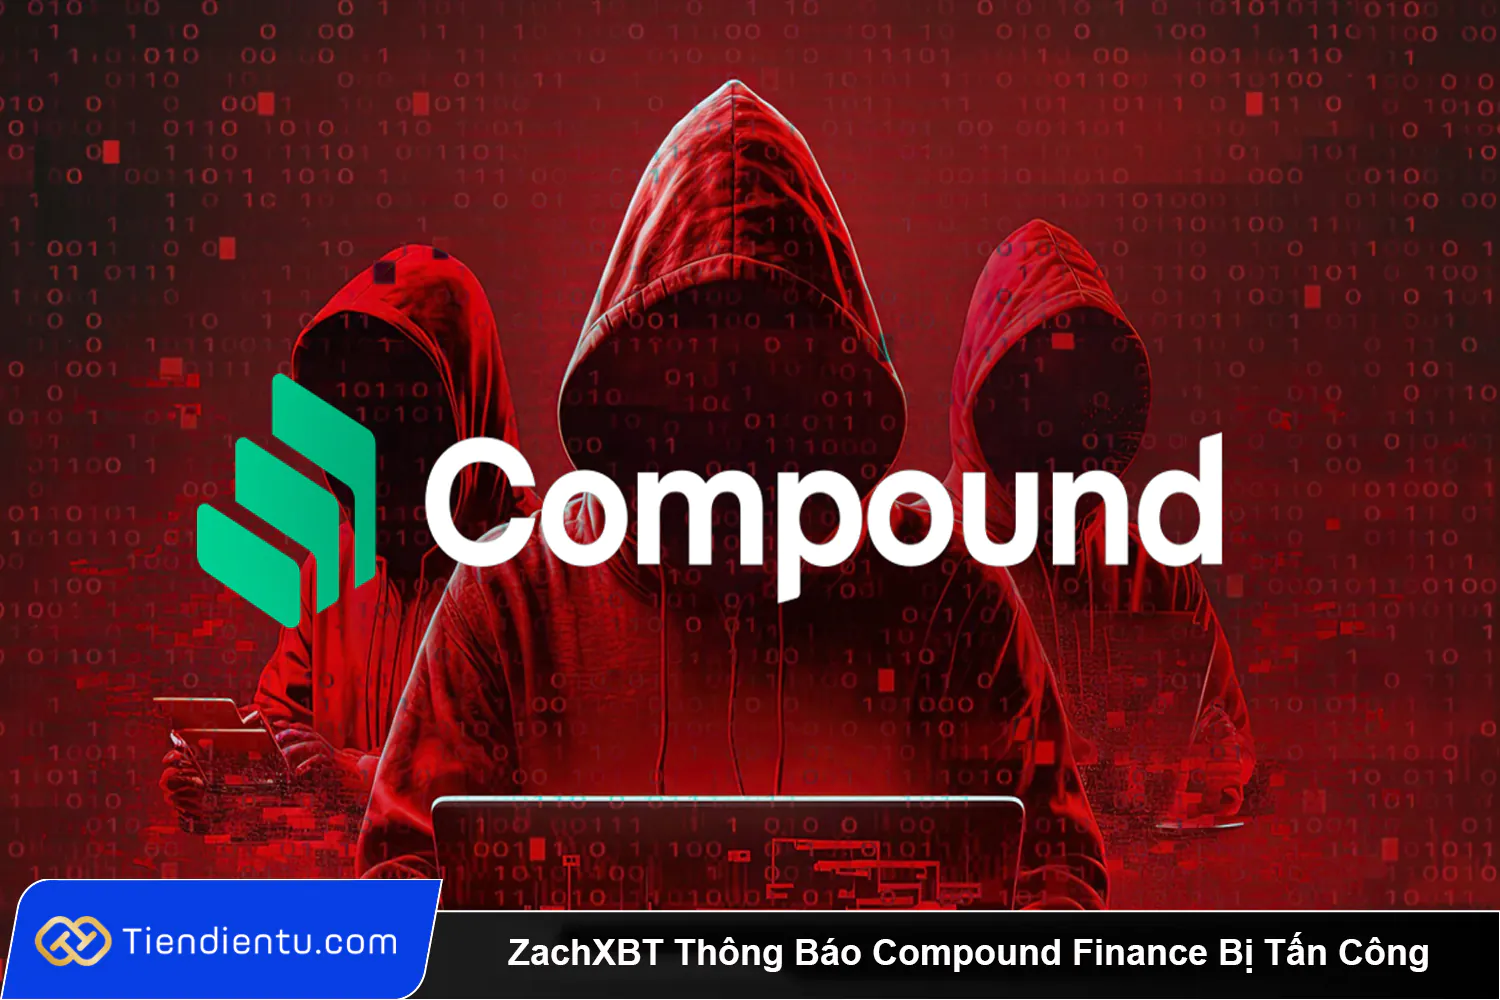 ZachXBT Thong Bao Website Compound Finance Bi Tan Cong